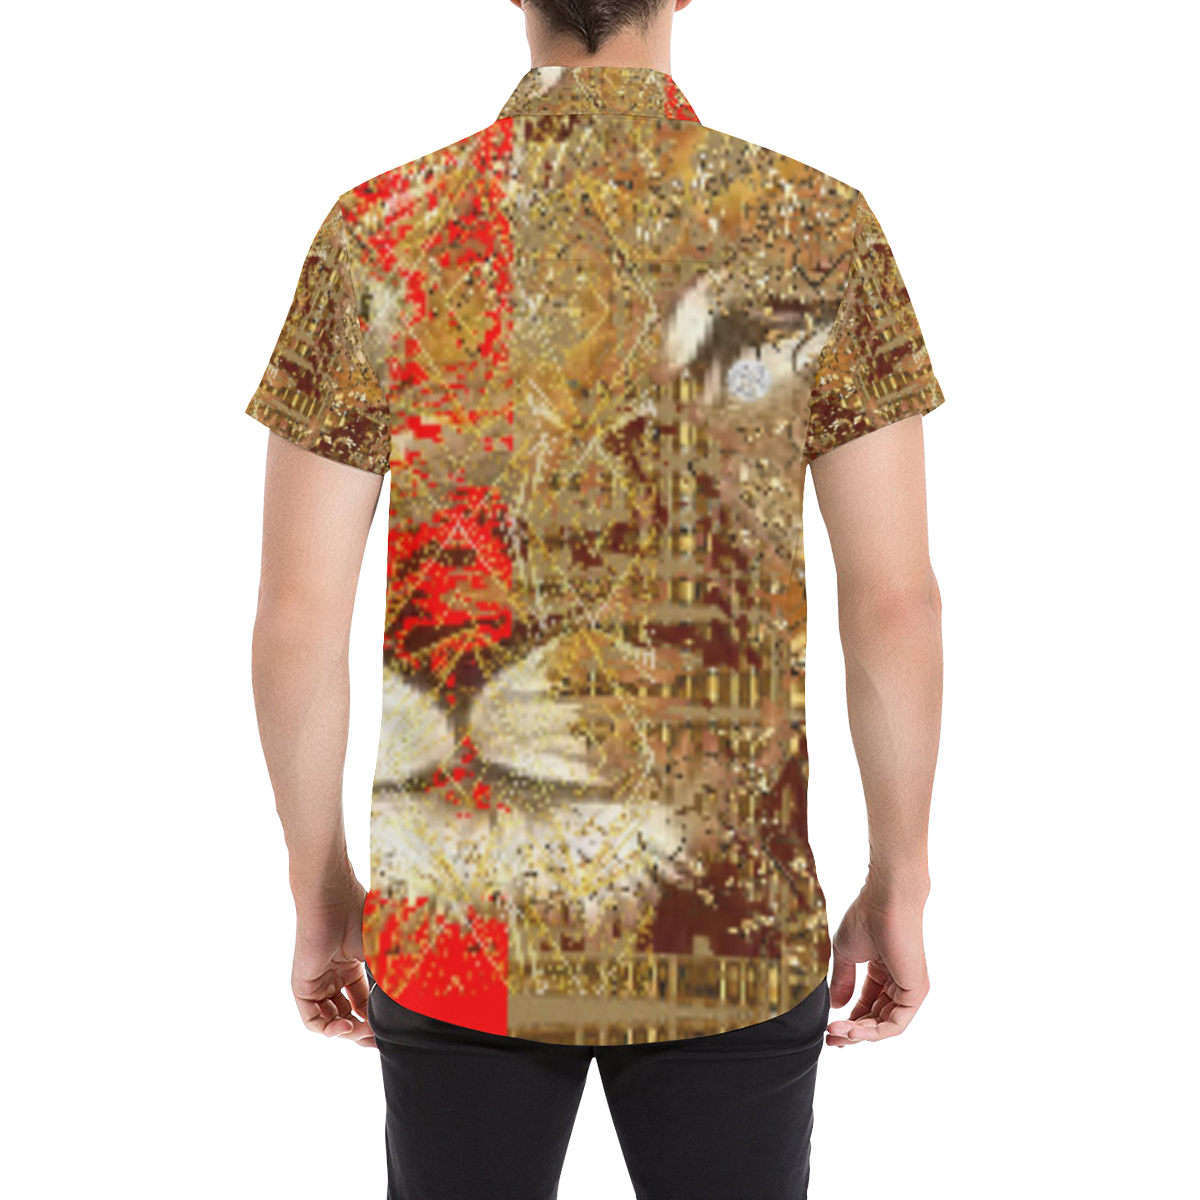 ARTSITC LION By kiekie strickland Men's All Over Print Short Sleeve Shirt (Model T53)